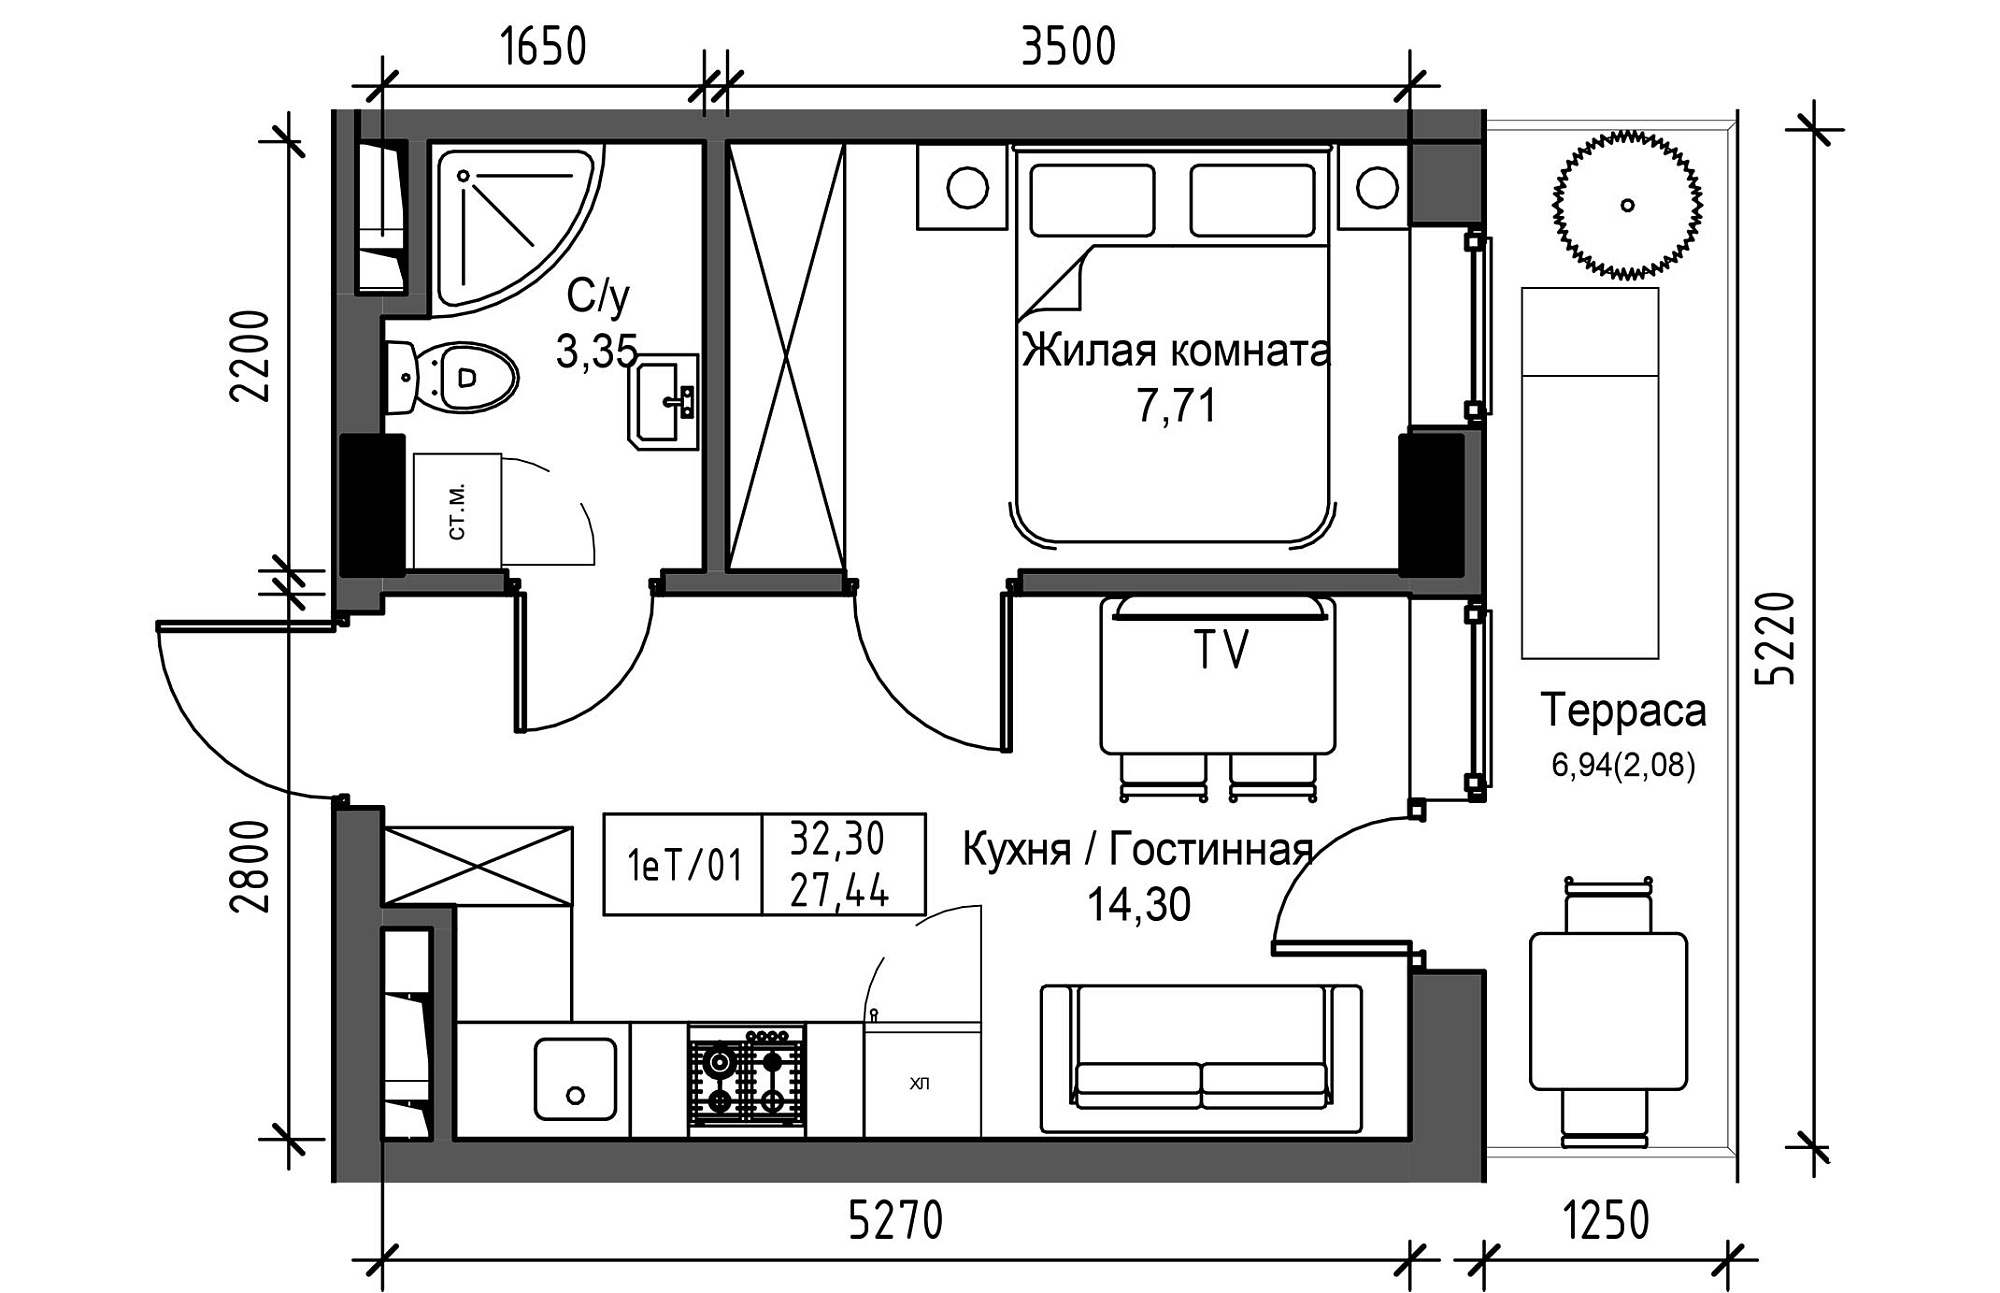 Планування 1-к квартира площею 27.44м2, UM-003-05/0036.